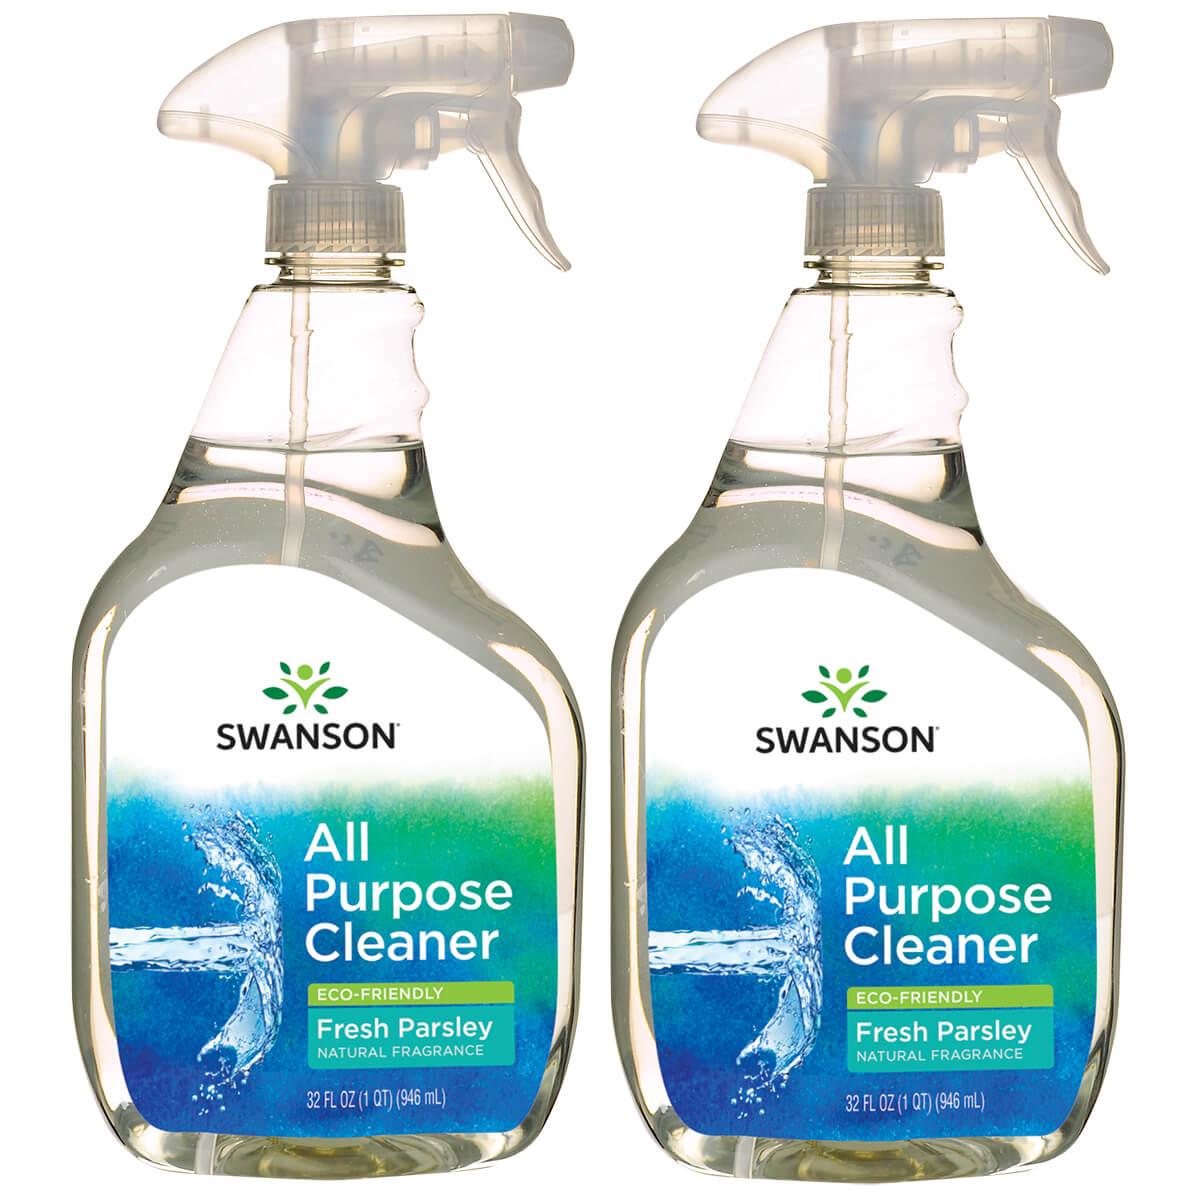 Swanson Healthy Home All-Purpose Cleaner - Eco-Friendly Fresh Parsley 2 Pack 32 fl oz Liquid